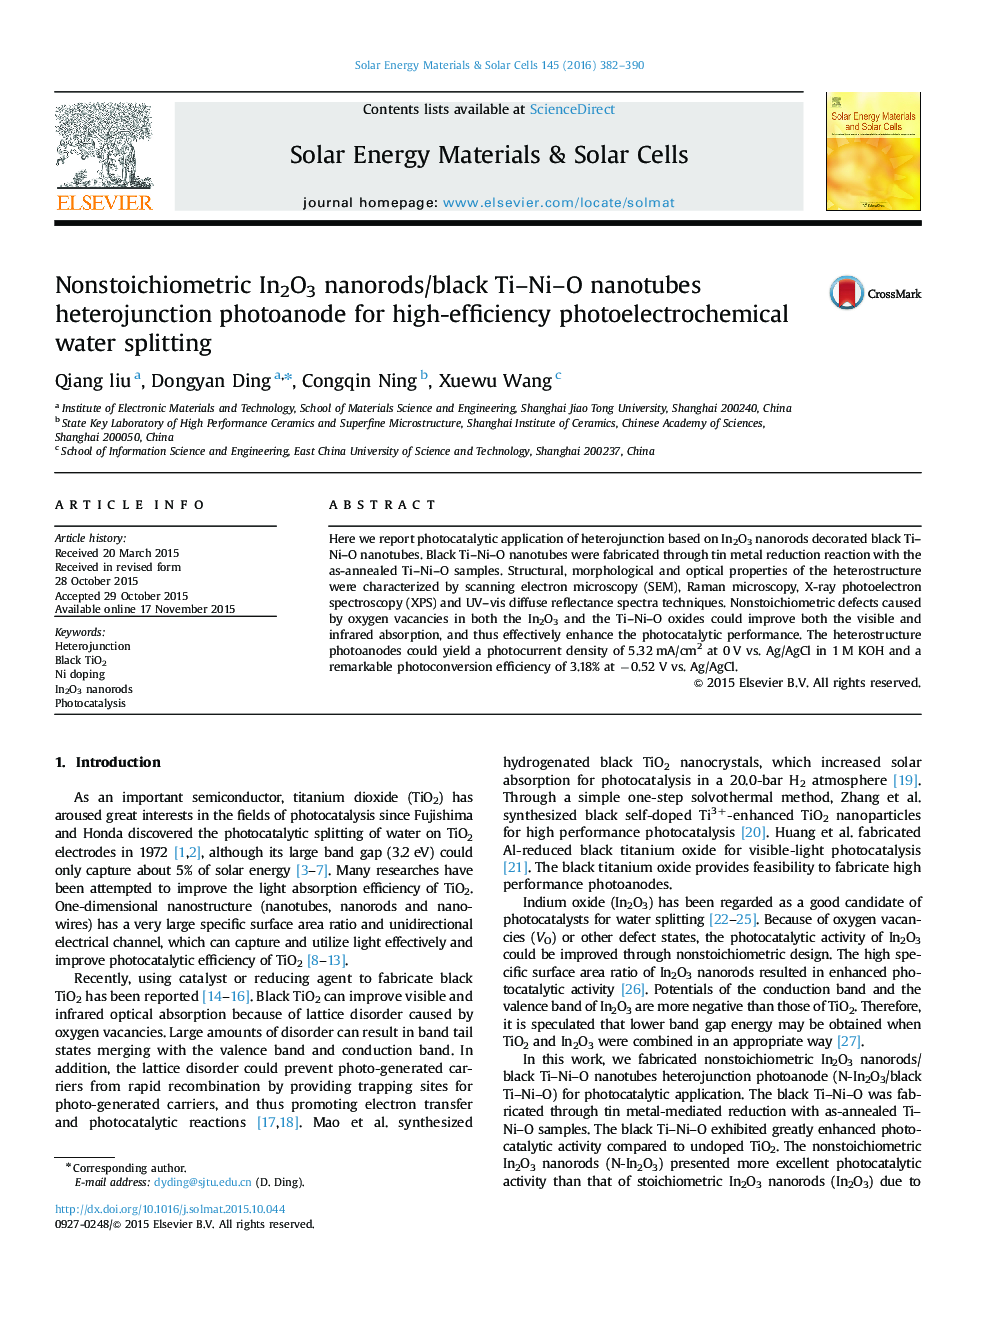 Nonstoichiometric In2O3 nanorods/black Ti–Ni–O nanotubes heterojunction photoanode for high-efficiency photoelectrochemical water splitting